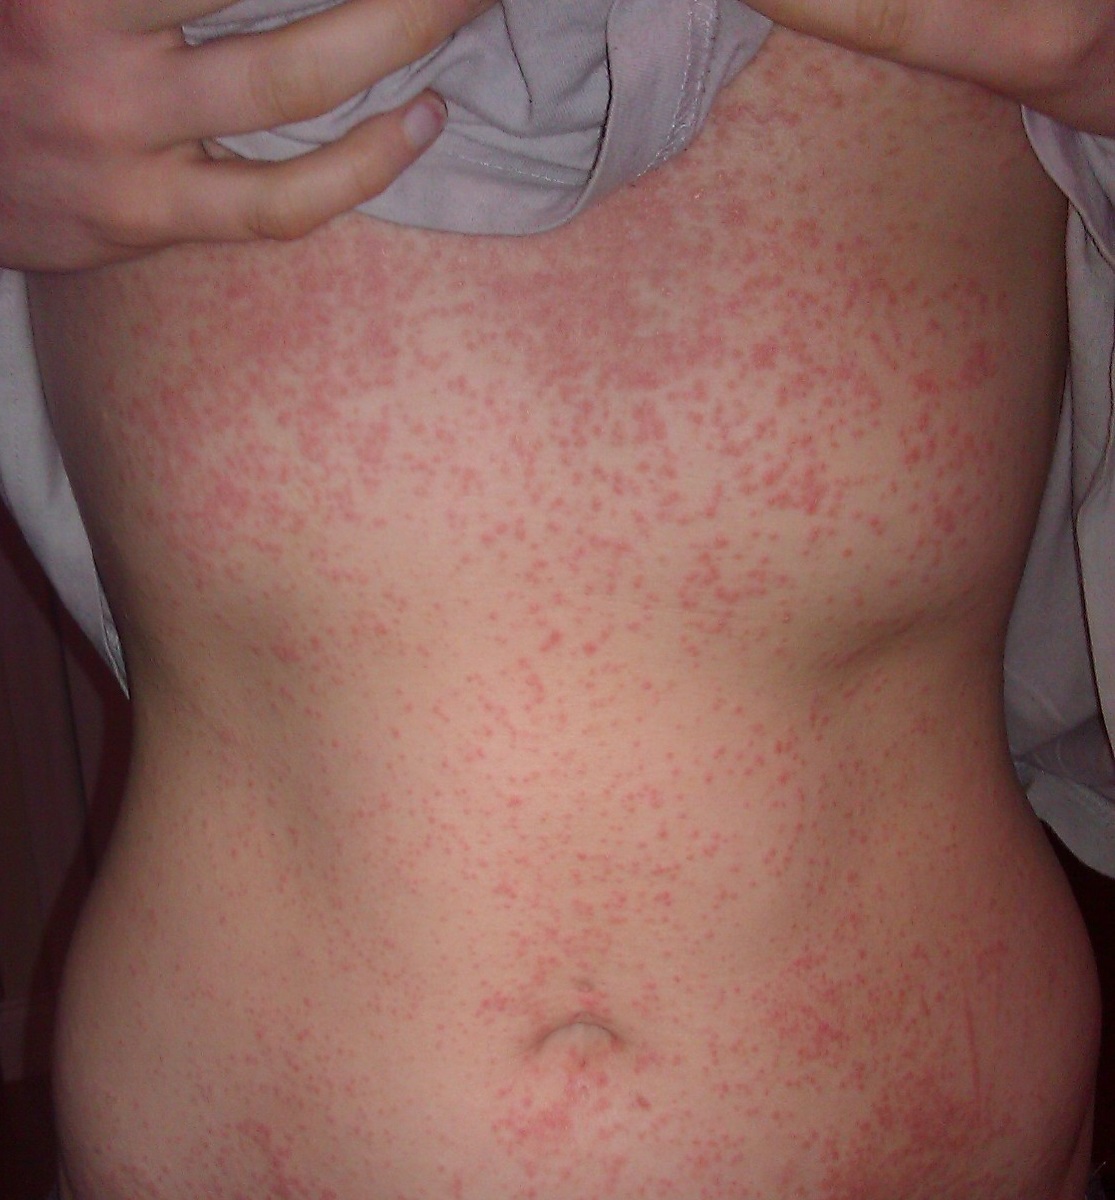 Eczema and prednisone advice.. please? - Skincell.org